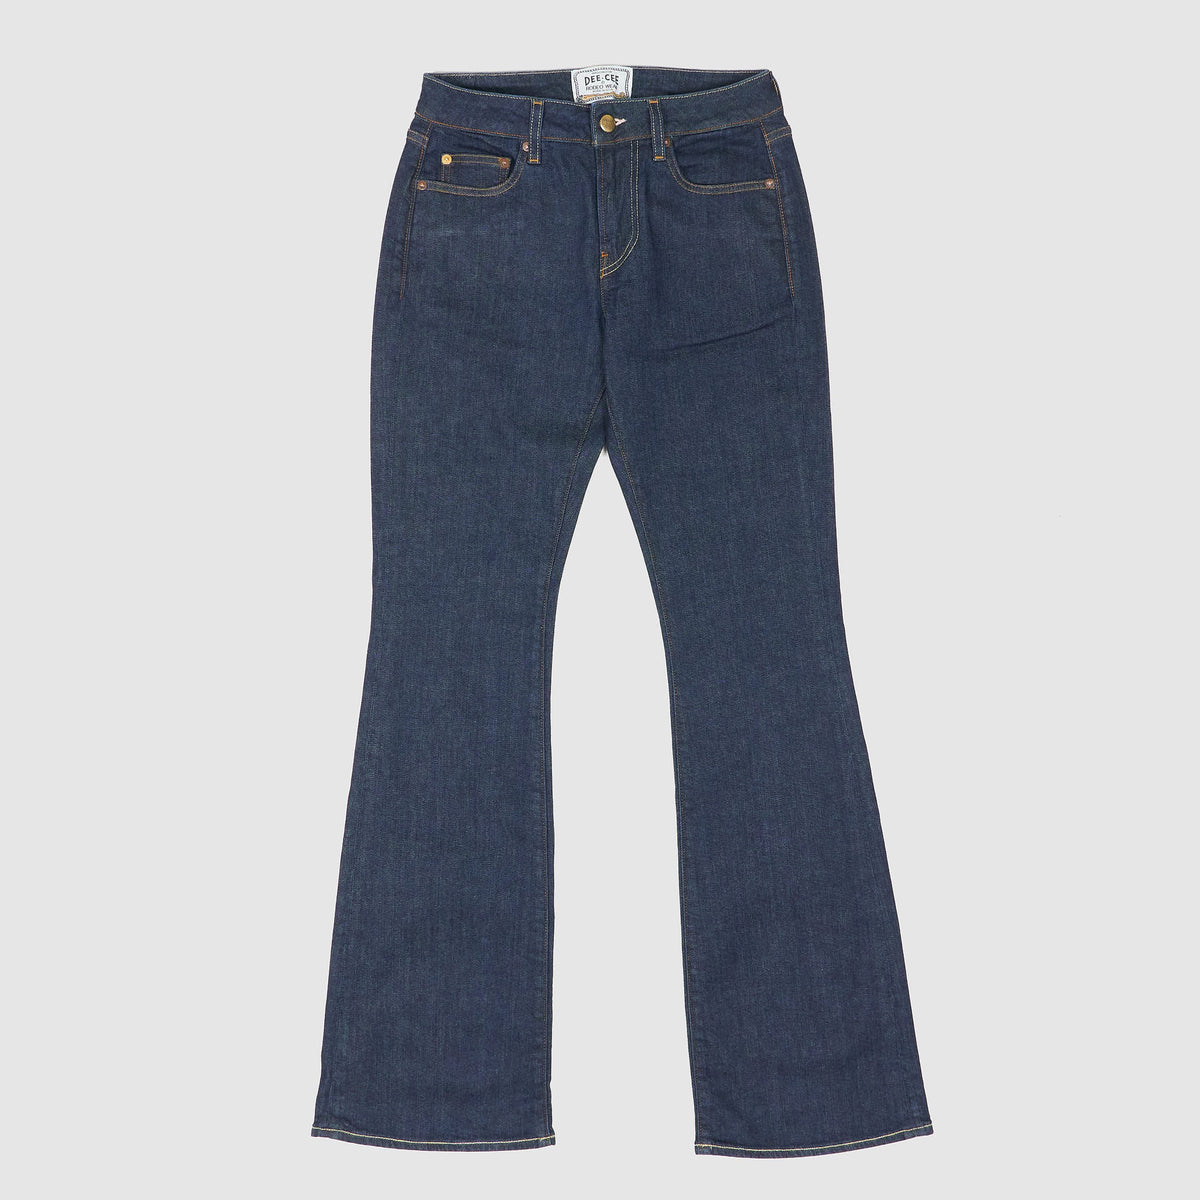 Washington Dee-Cee Ladies 5-Pocket Flared Boot Cut Jeans